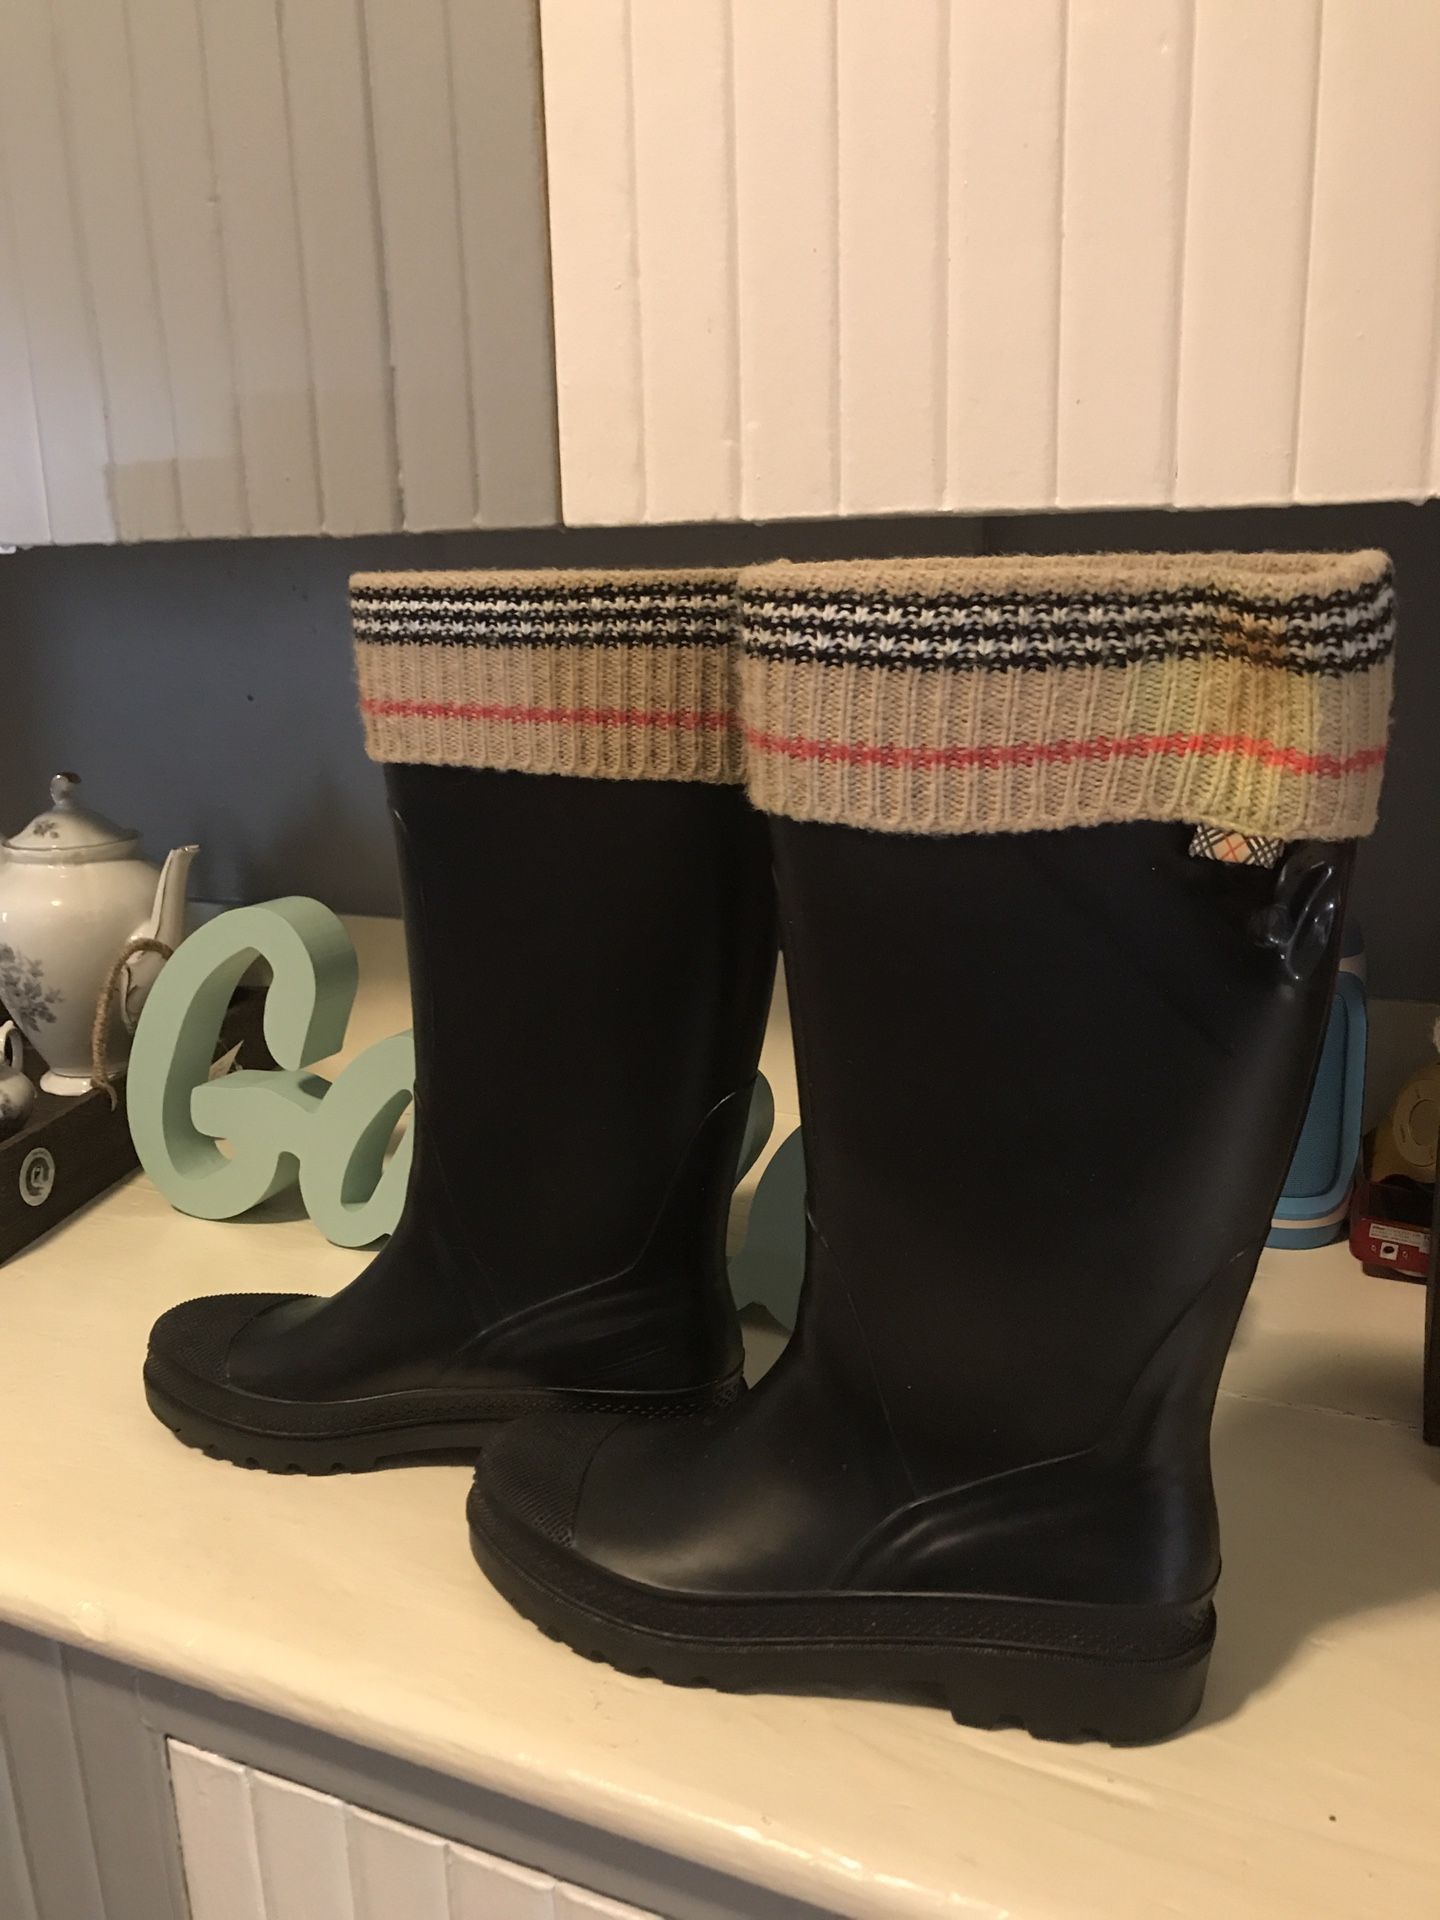 Burberry rain boots size 9